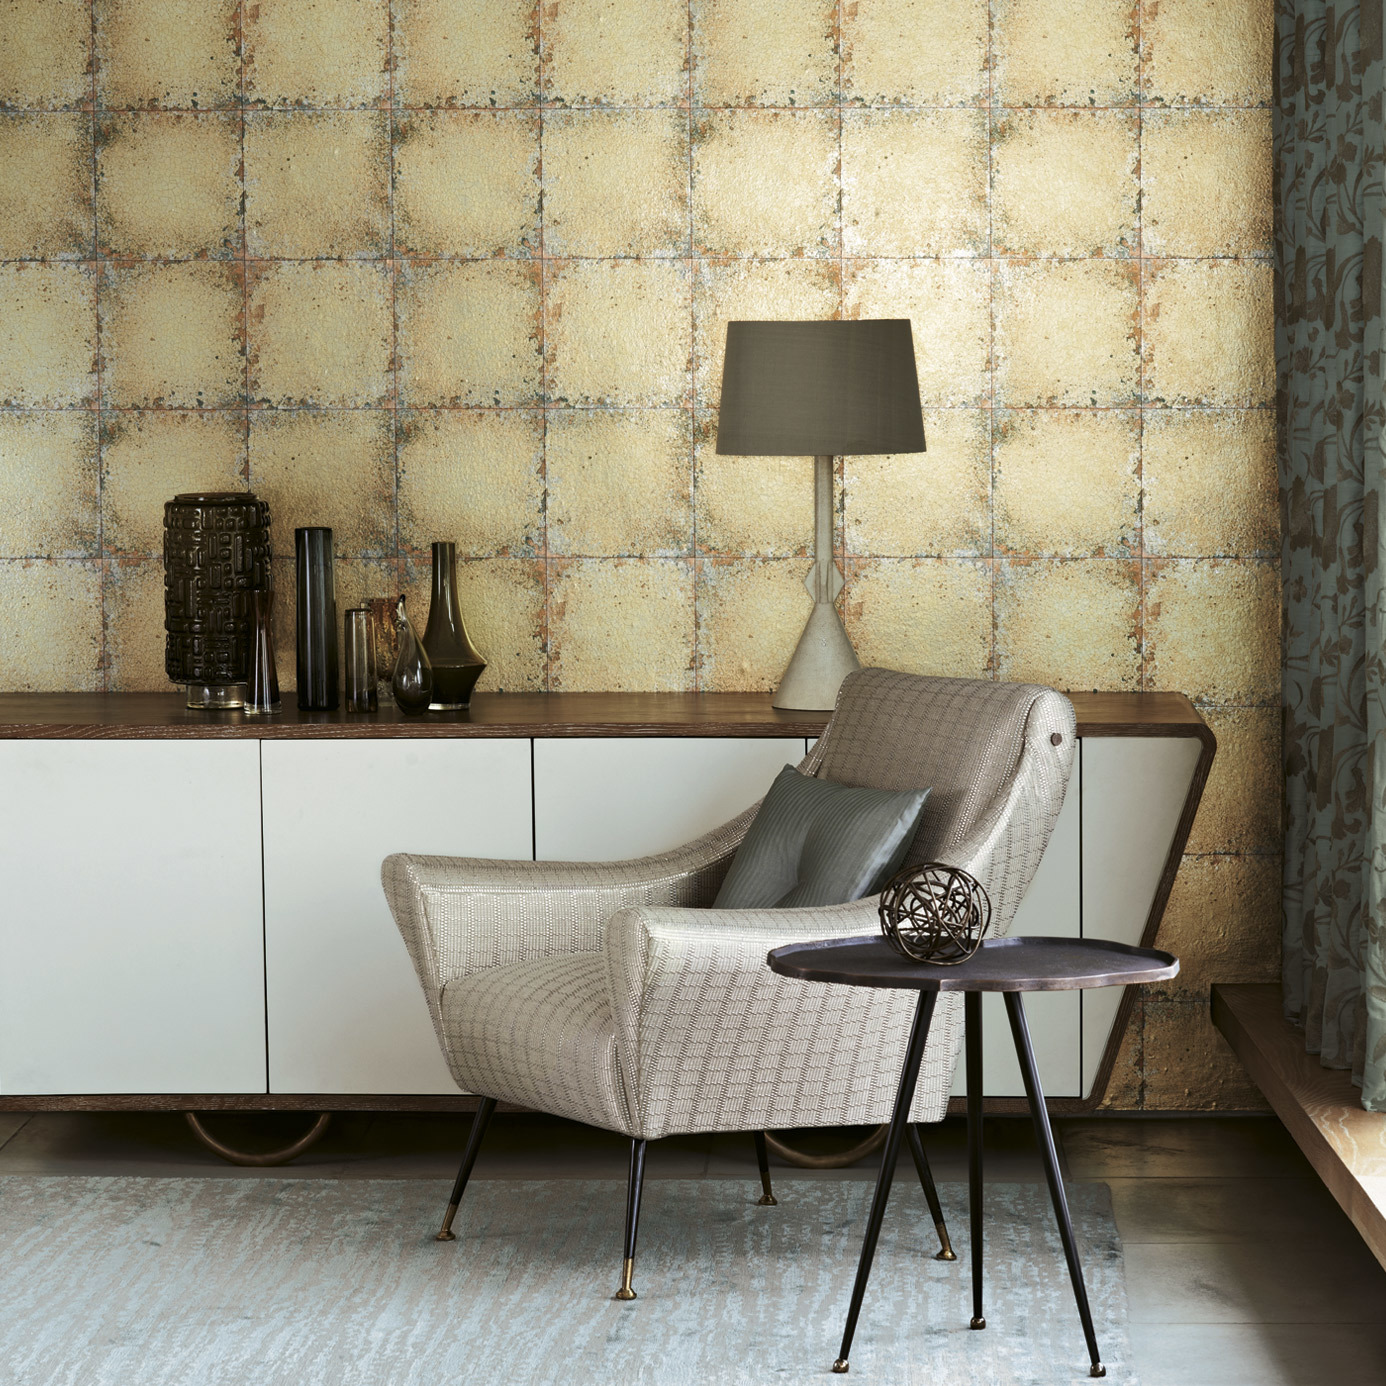 Lustre Tile Gold Wallpaper by ZOF